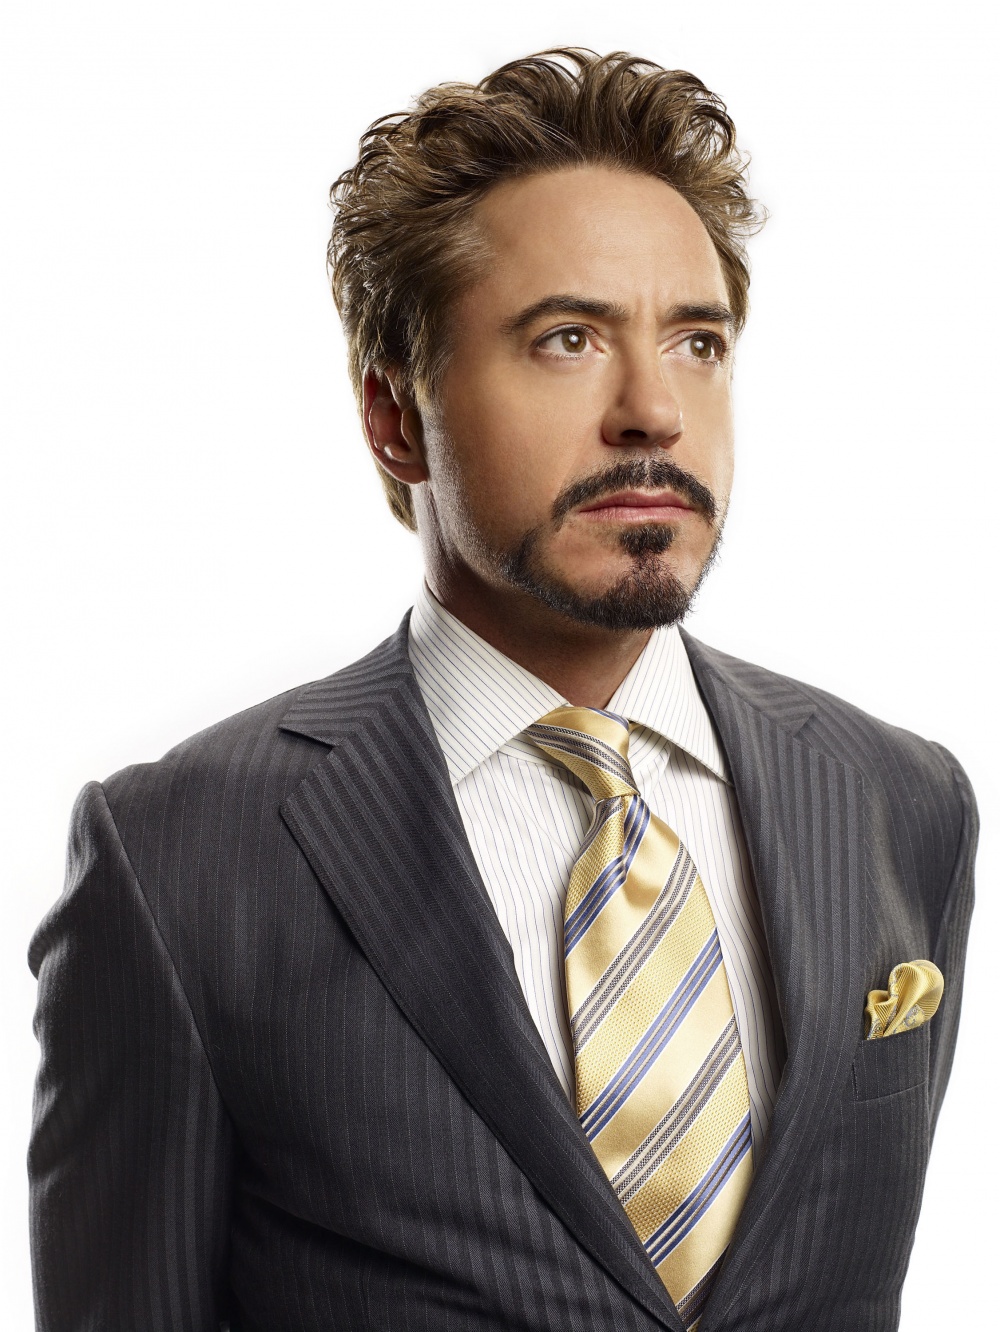 Robert Downey Jr. - News - IMDb